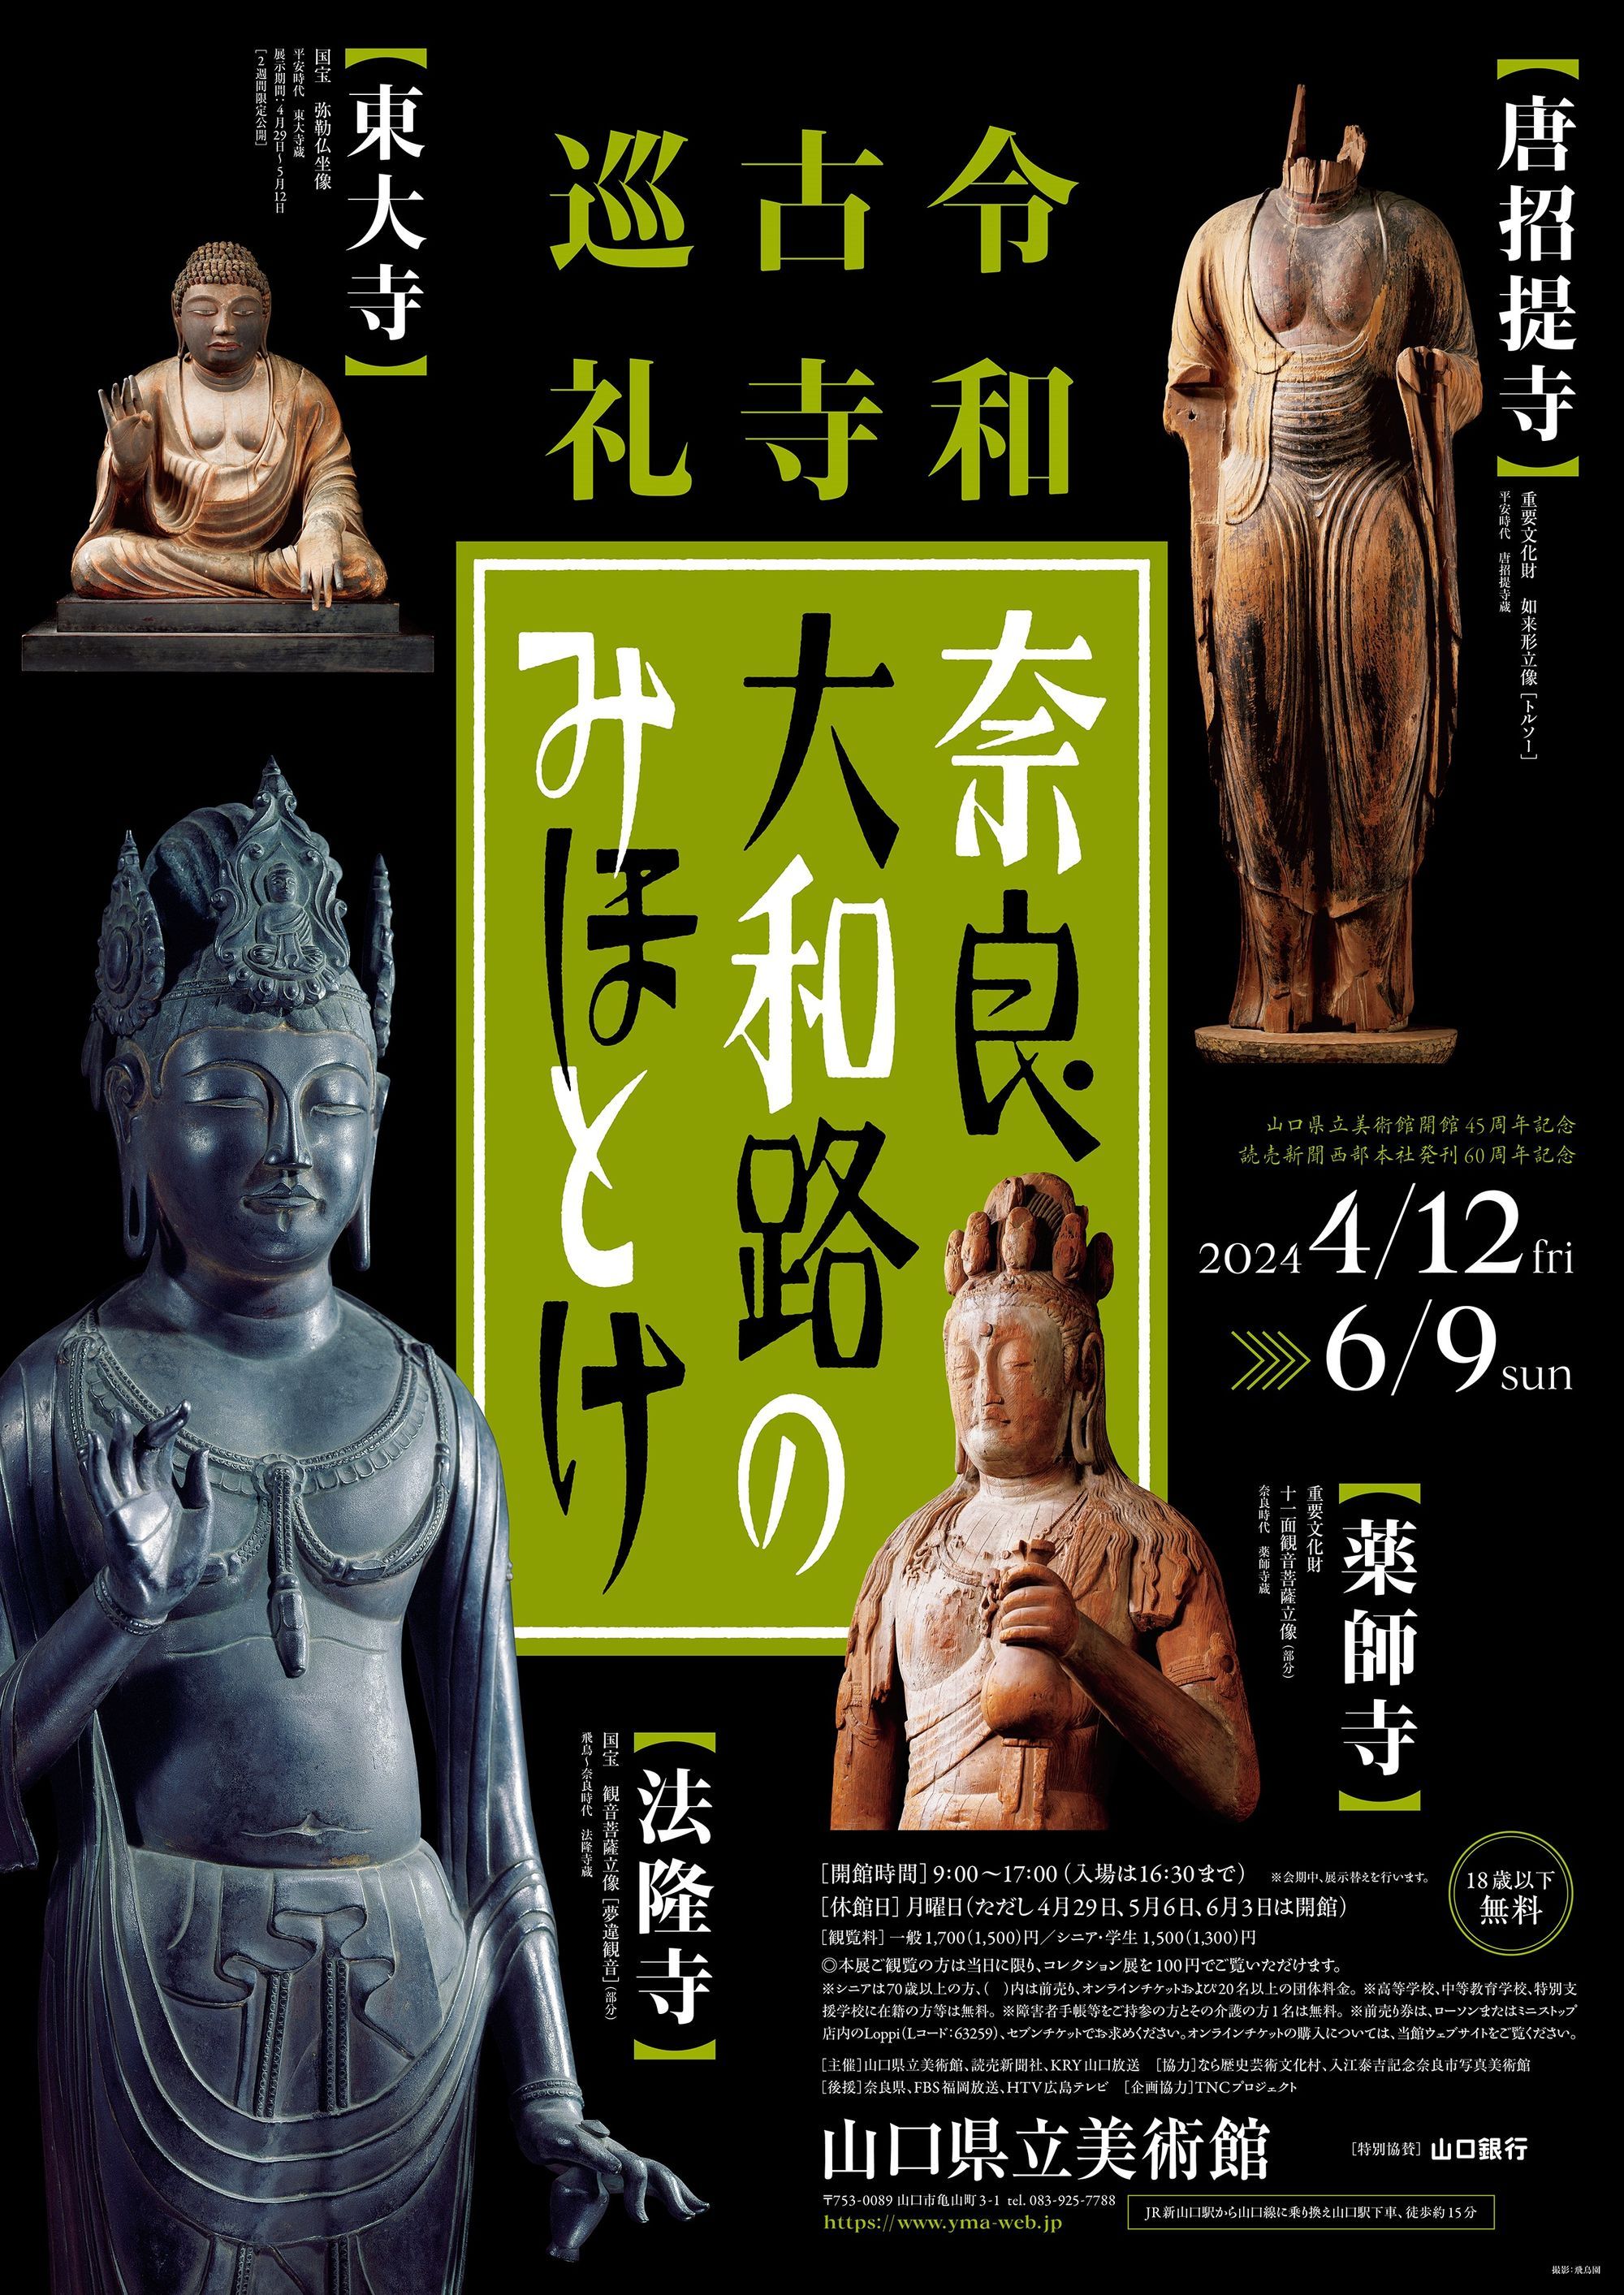 Nara Yamatoji Mihotoke - Reiwa Ancient Temple Pilgrimage: A Journey Through Japan's Spiritual Heritage